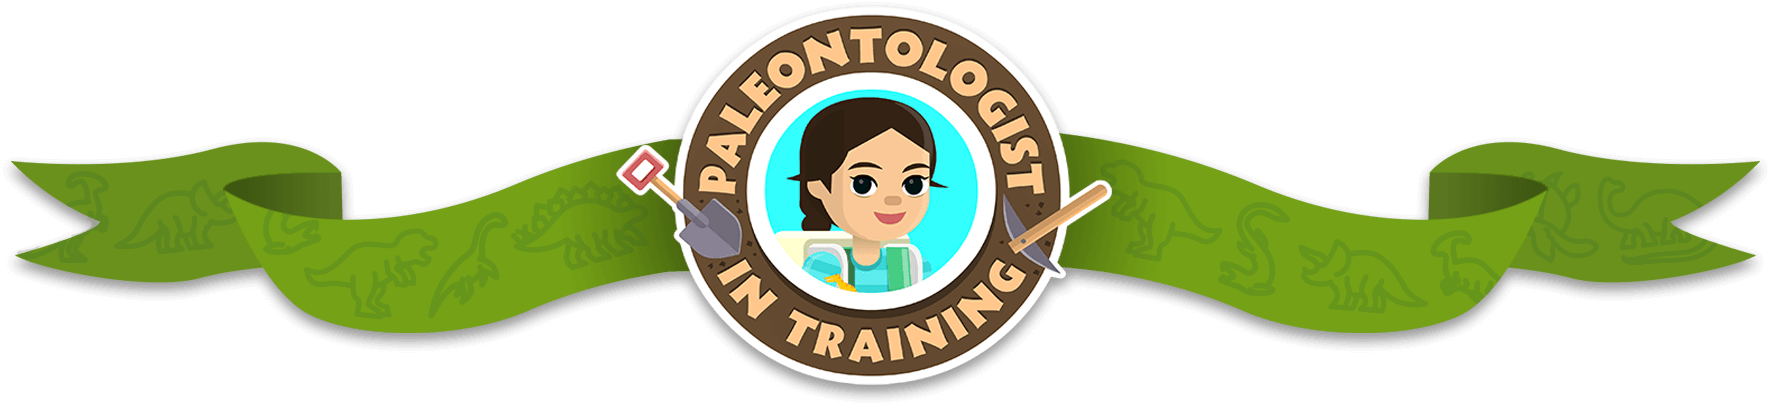 Paleontologist in training